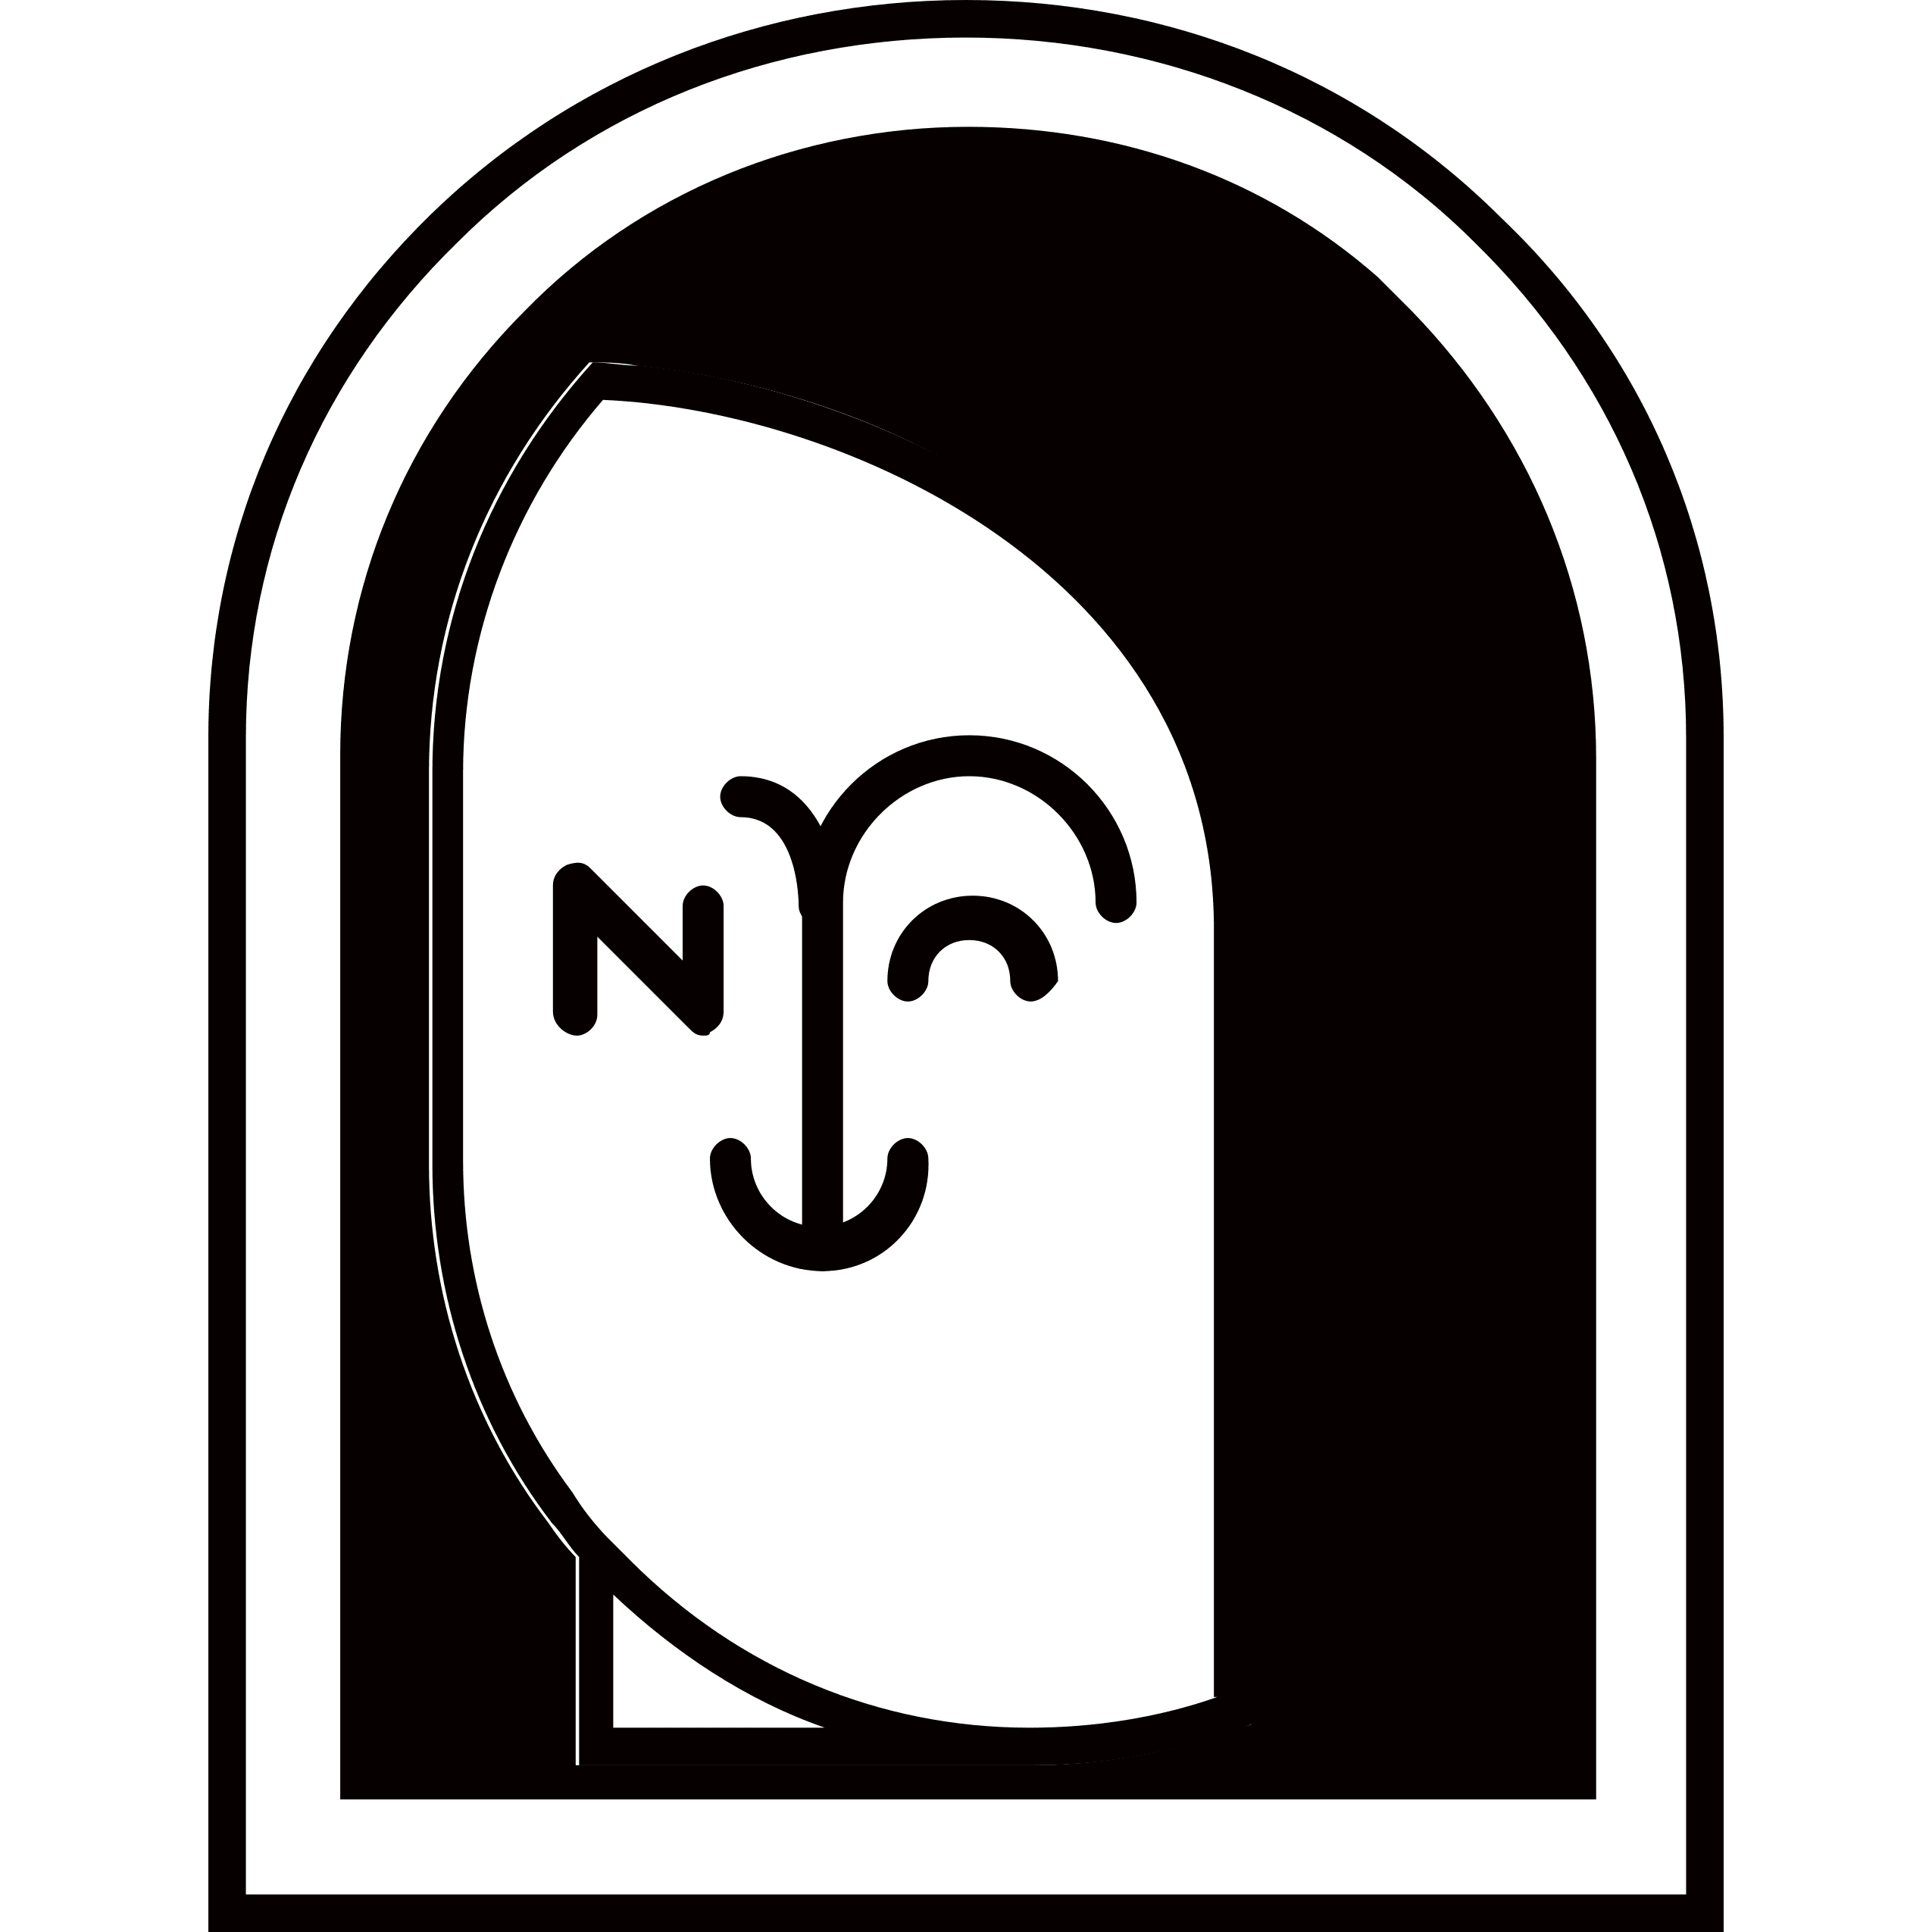 APENFT logo in png format